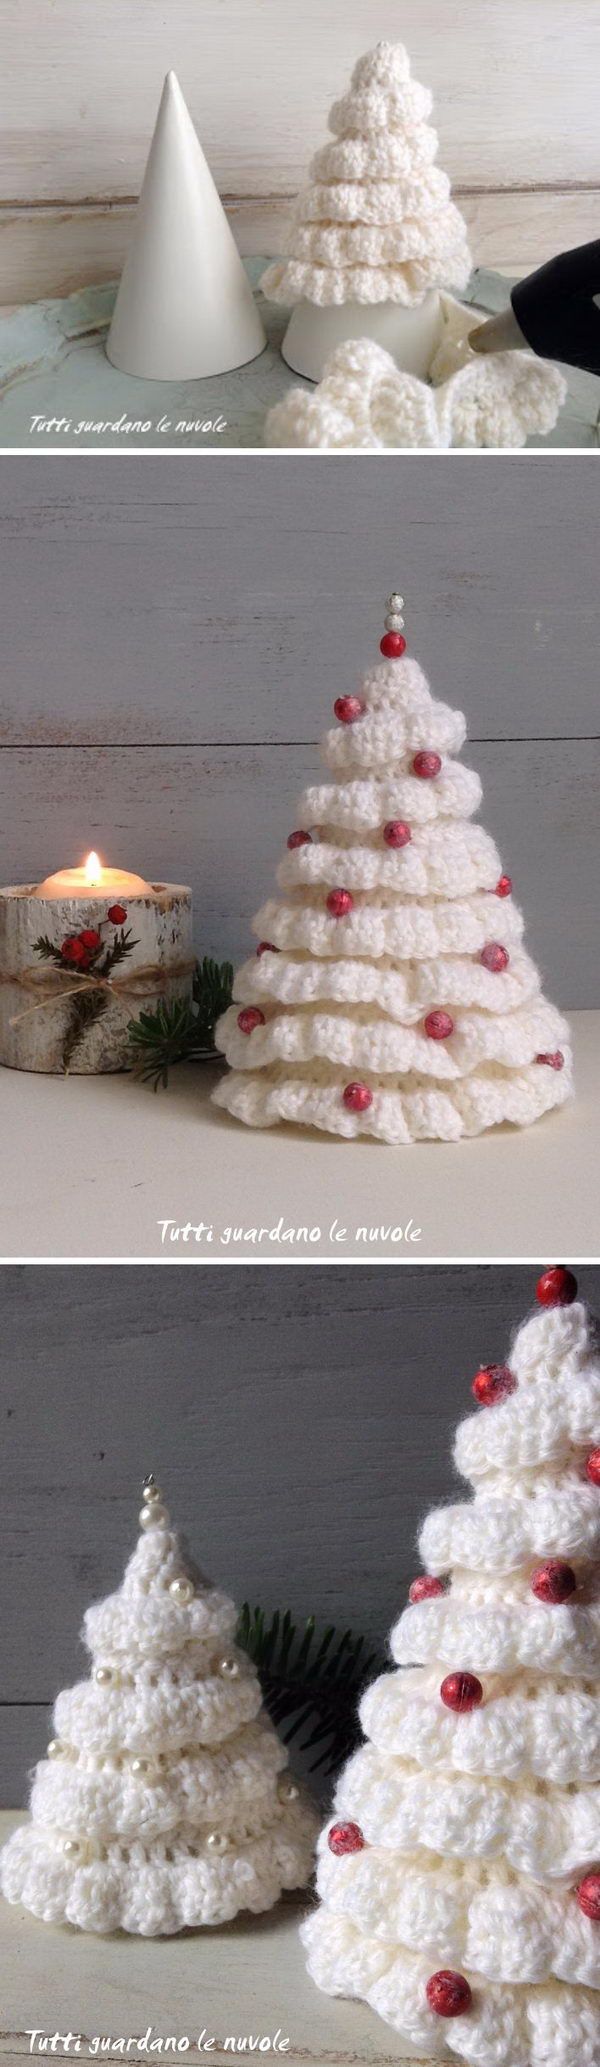 25+ Free Christmas Crochet Patterns For Beginners